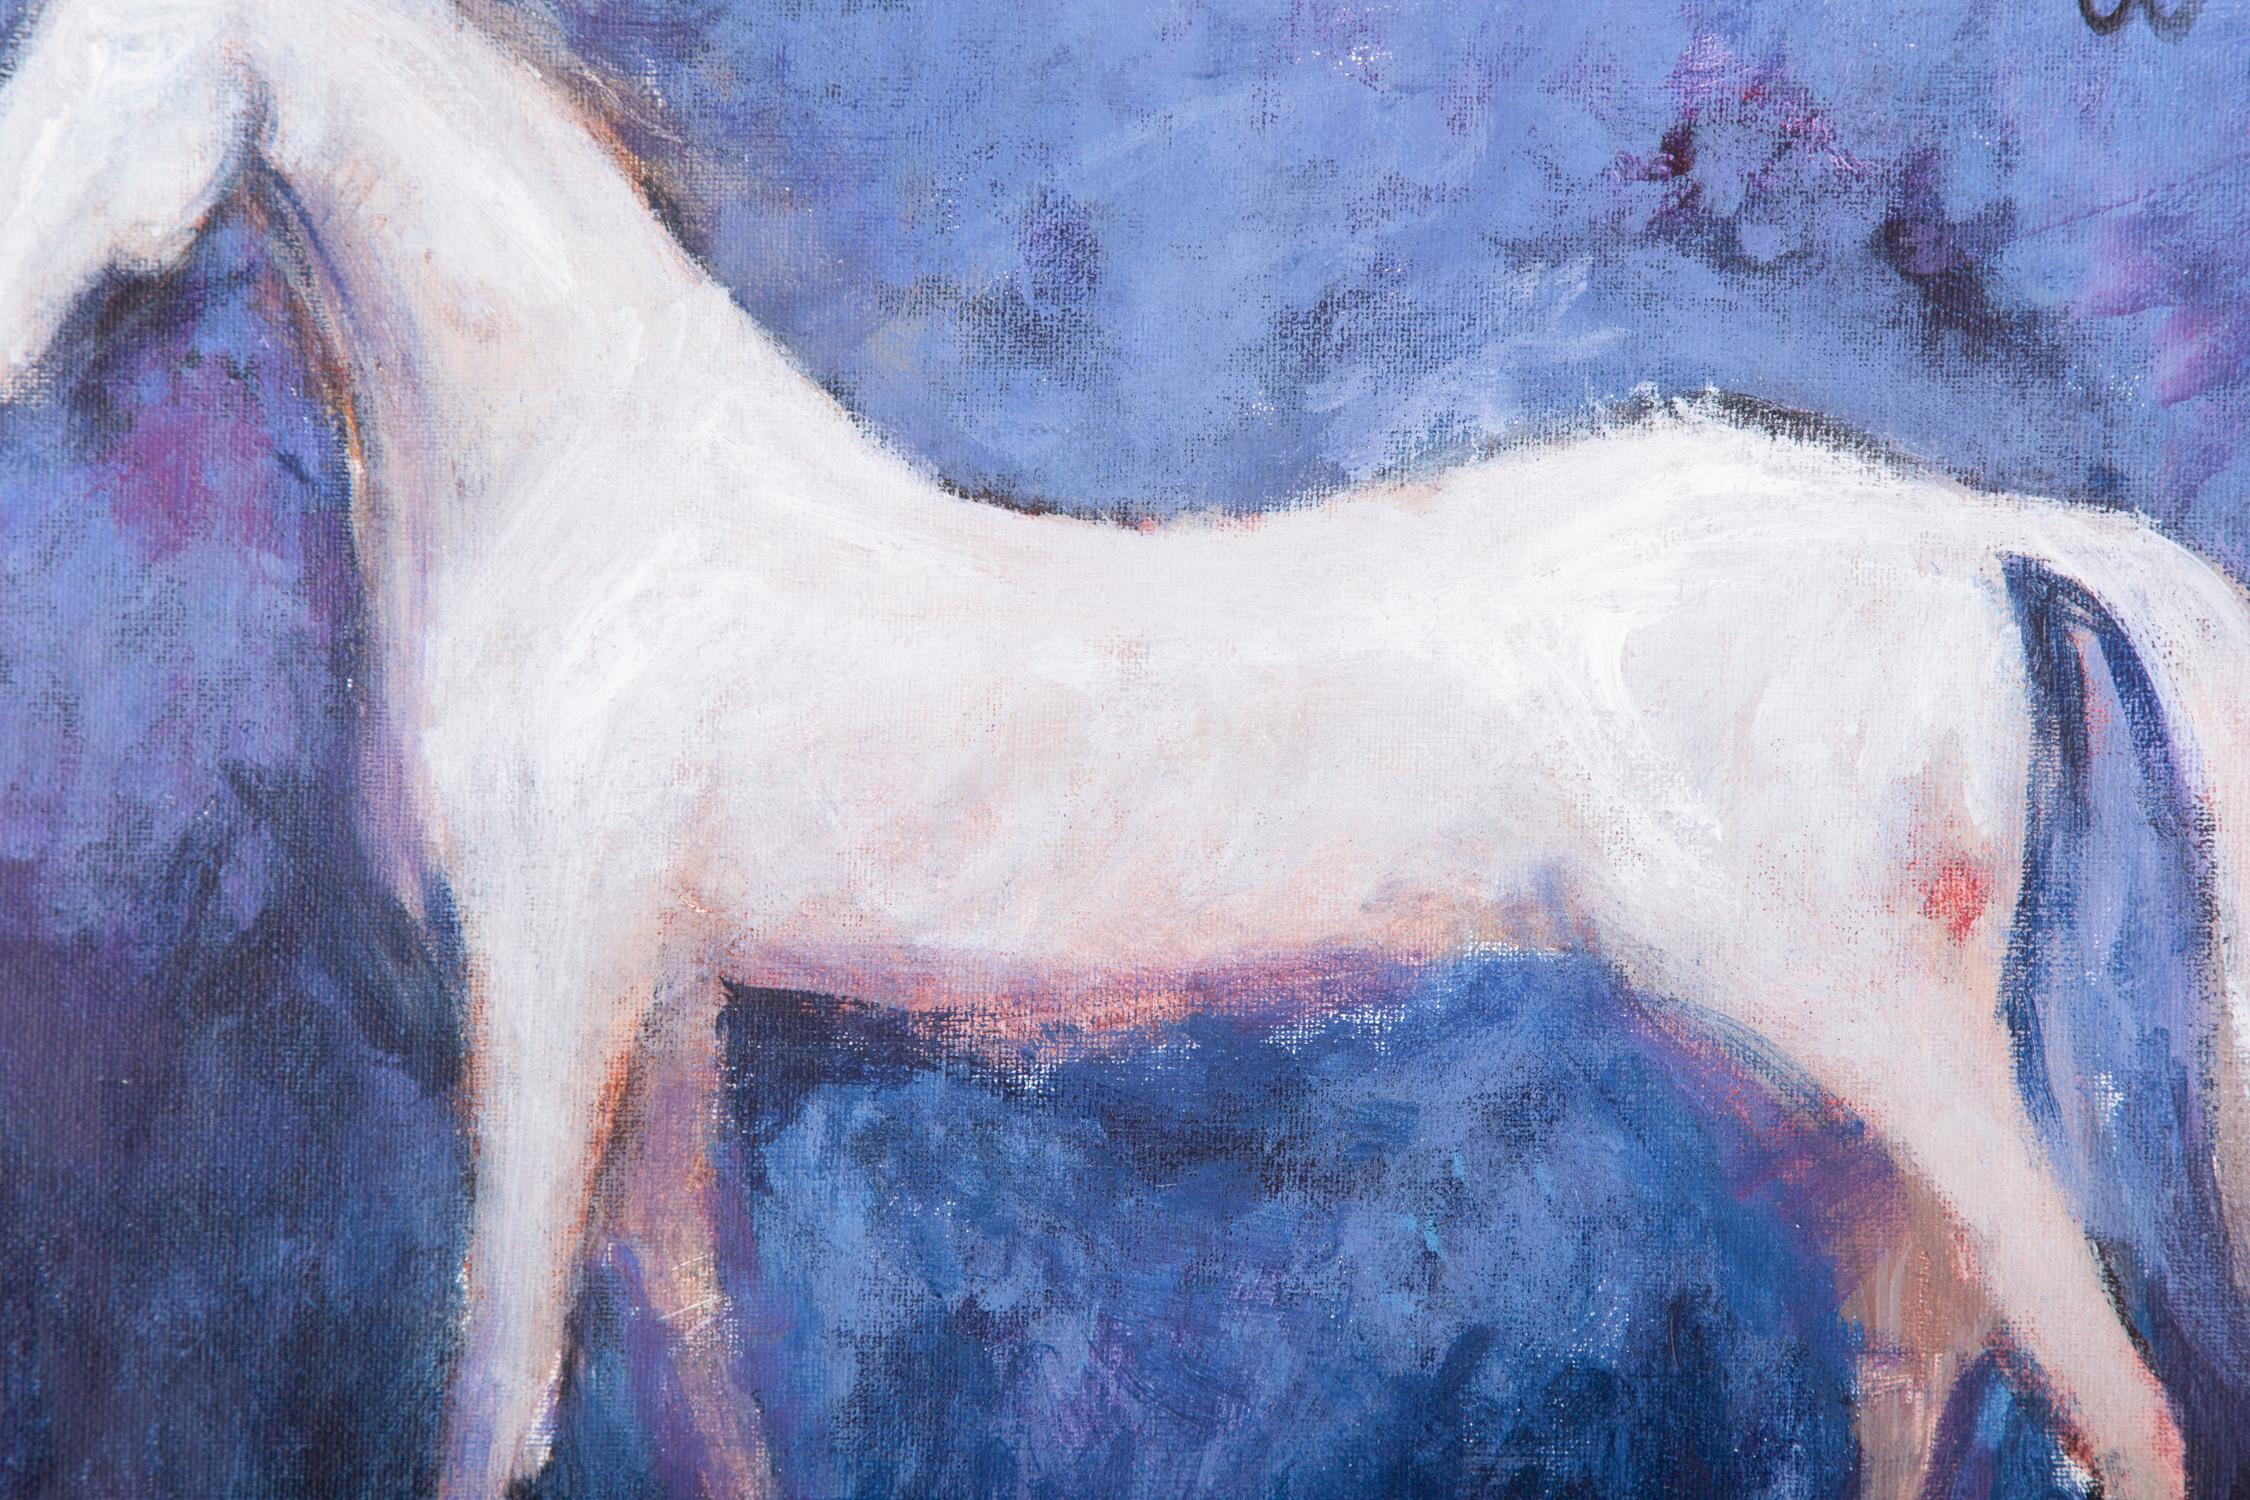  Title: White Horse
 Medium: Oil on canvas
 Size: 19